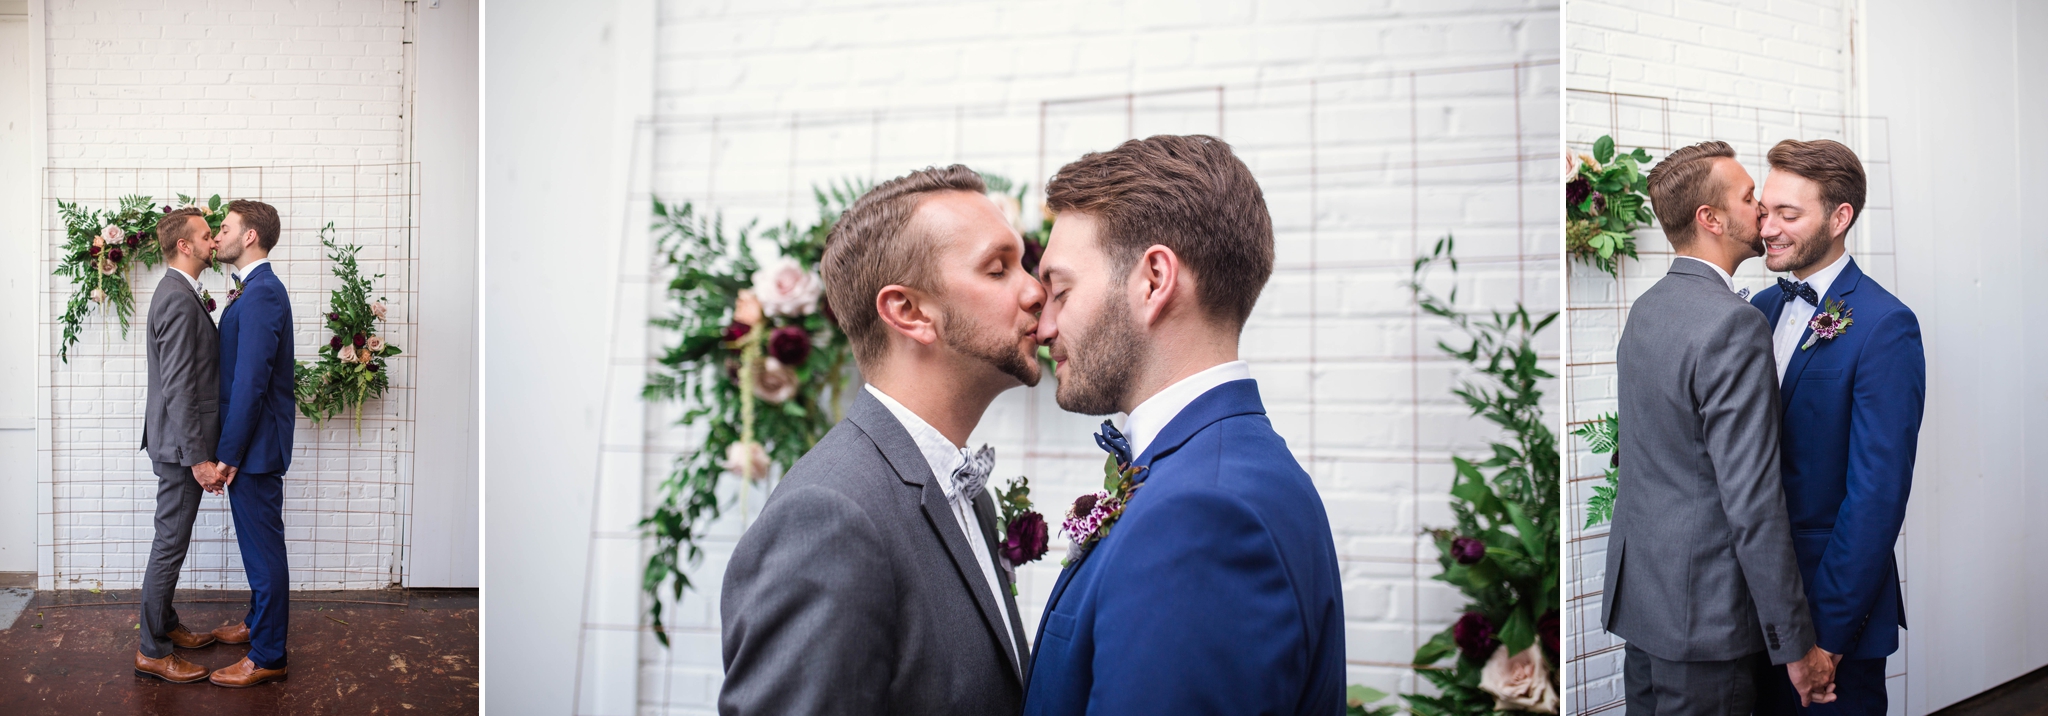 Gay and Lesbian friendly Wedding Photographer in Raleigh North Carolina - Johanna Dye Photography 7.jpg